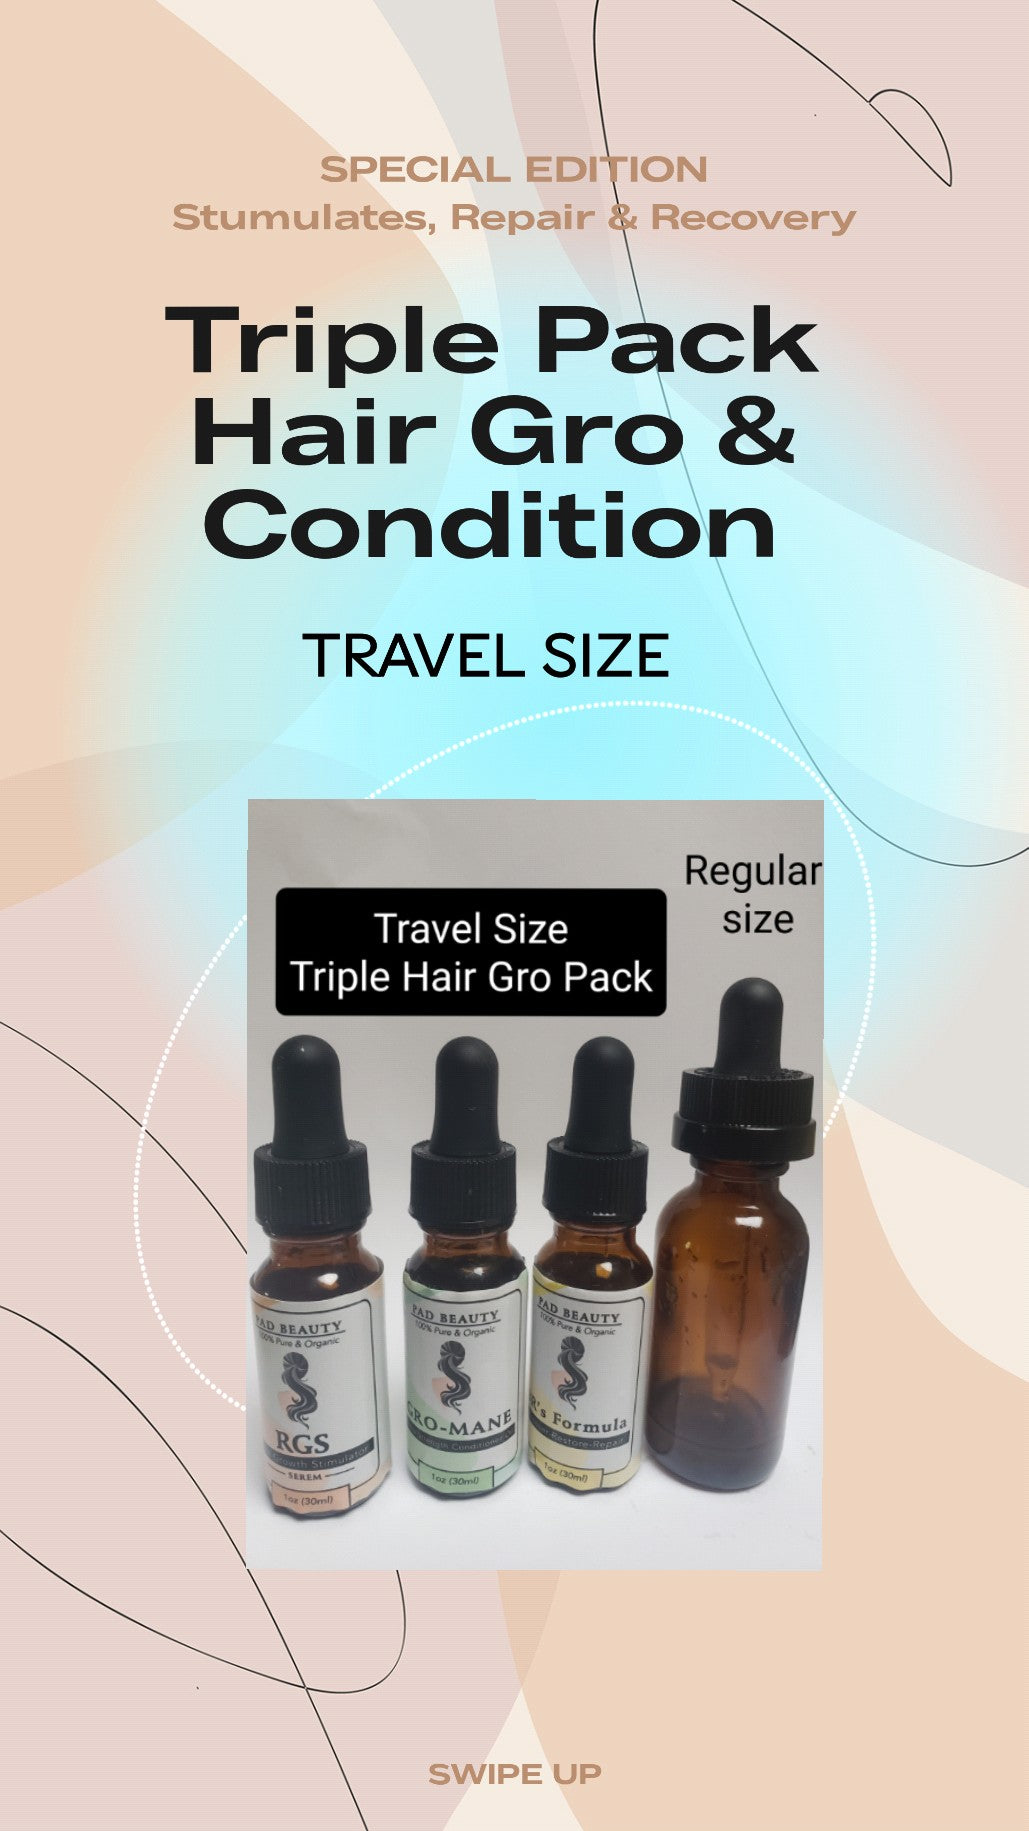 TRAVEL SIZE Triple Hair Gro Pack